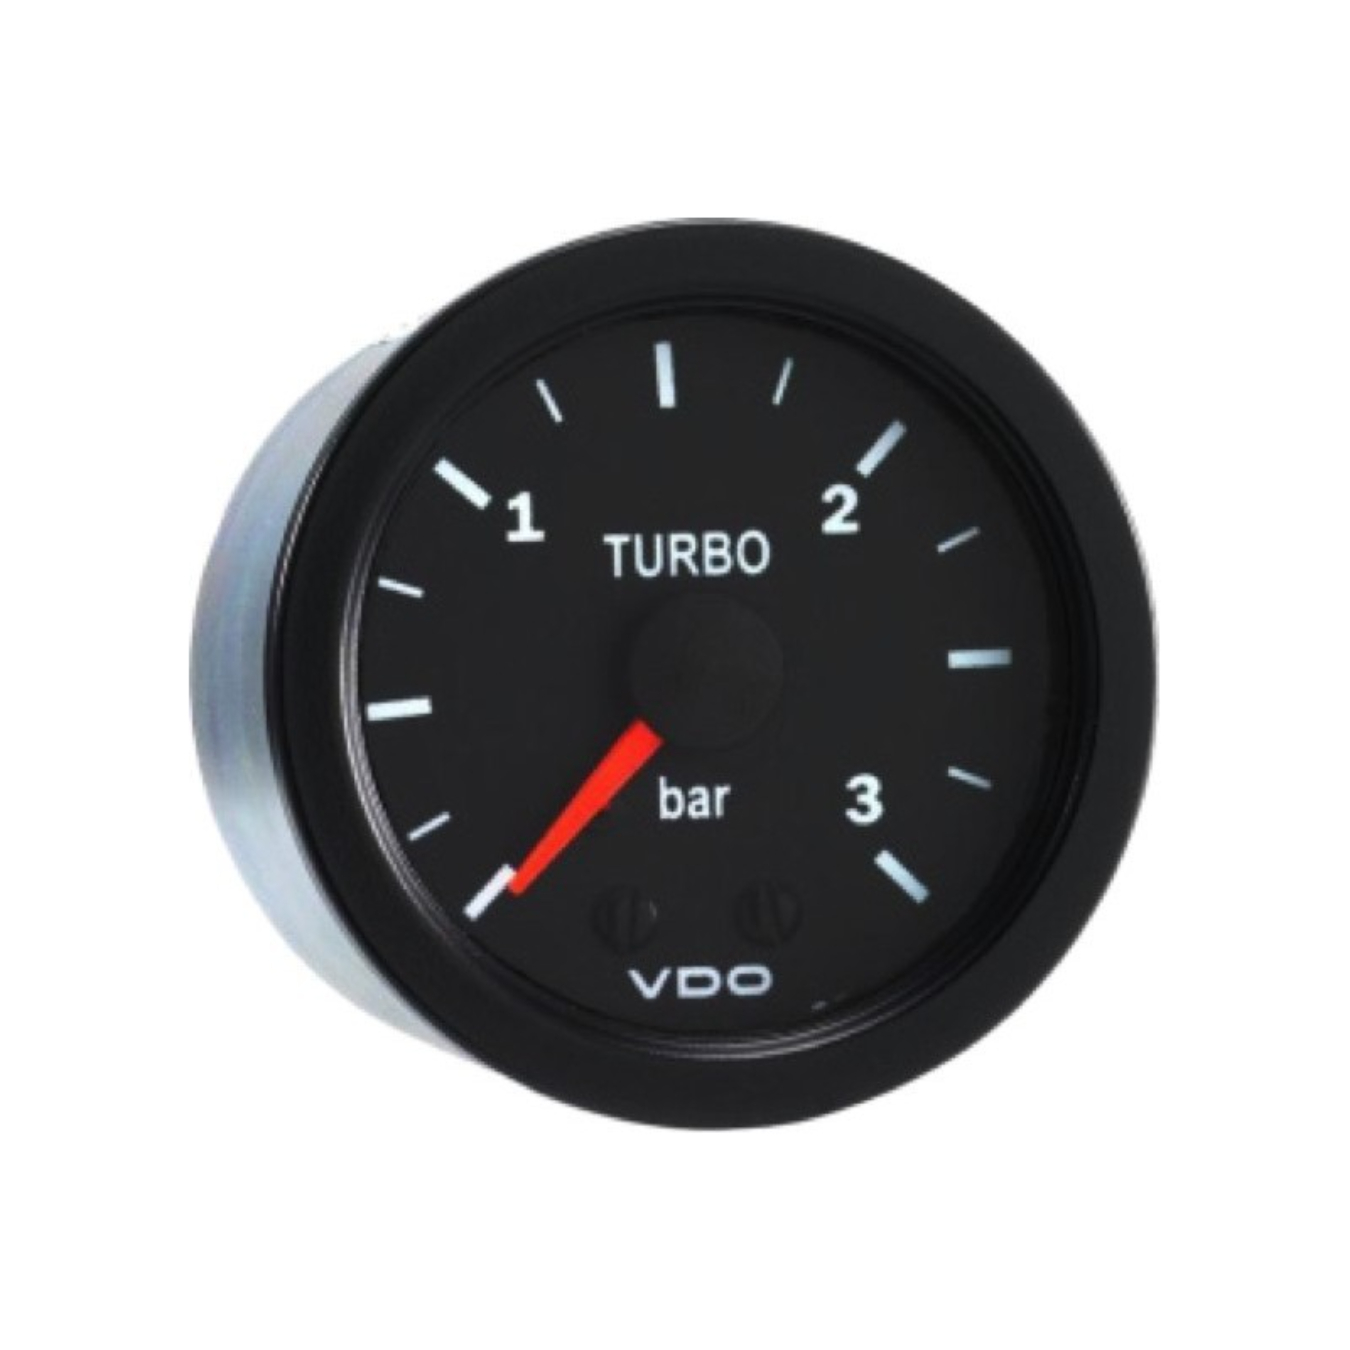 Manomètre STACK analogique pro pression turbo (-1.0+2.0 bar) - blanc